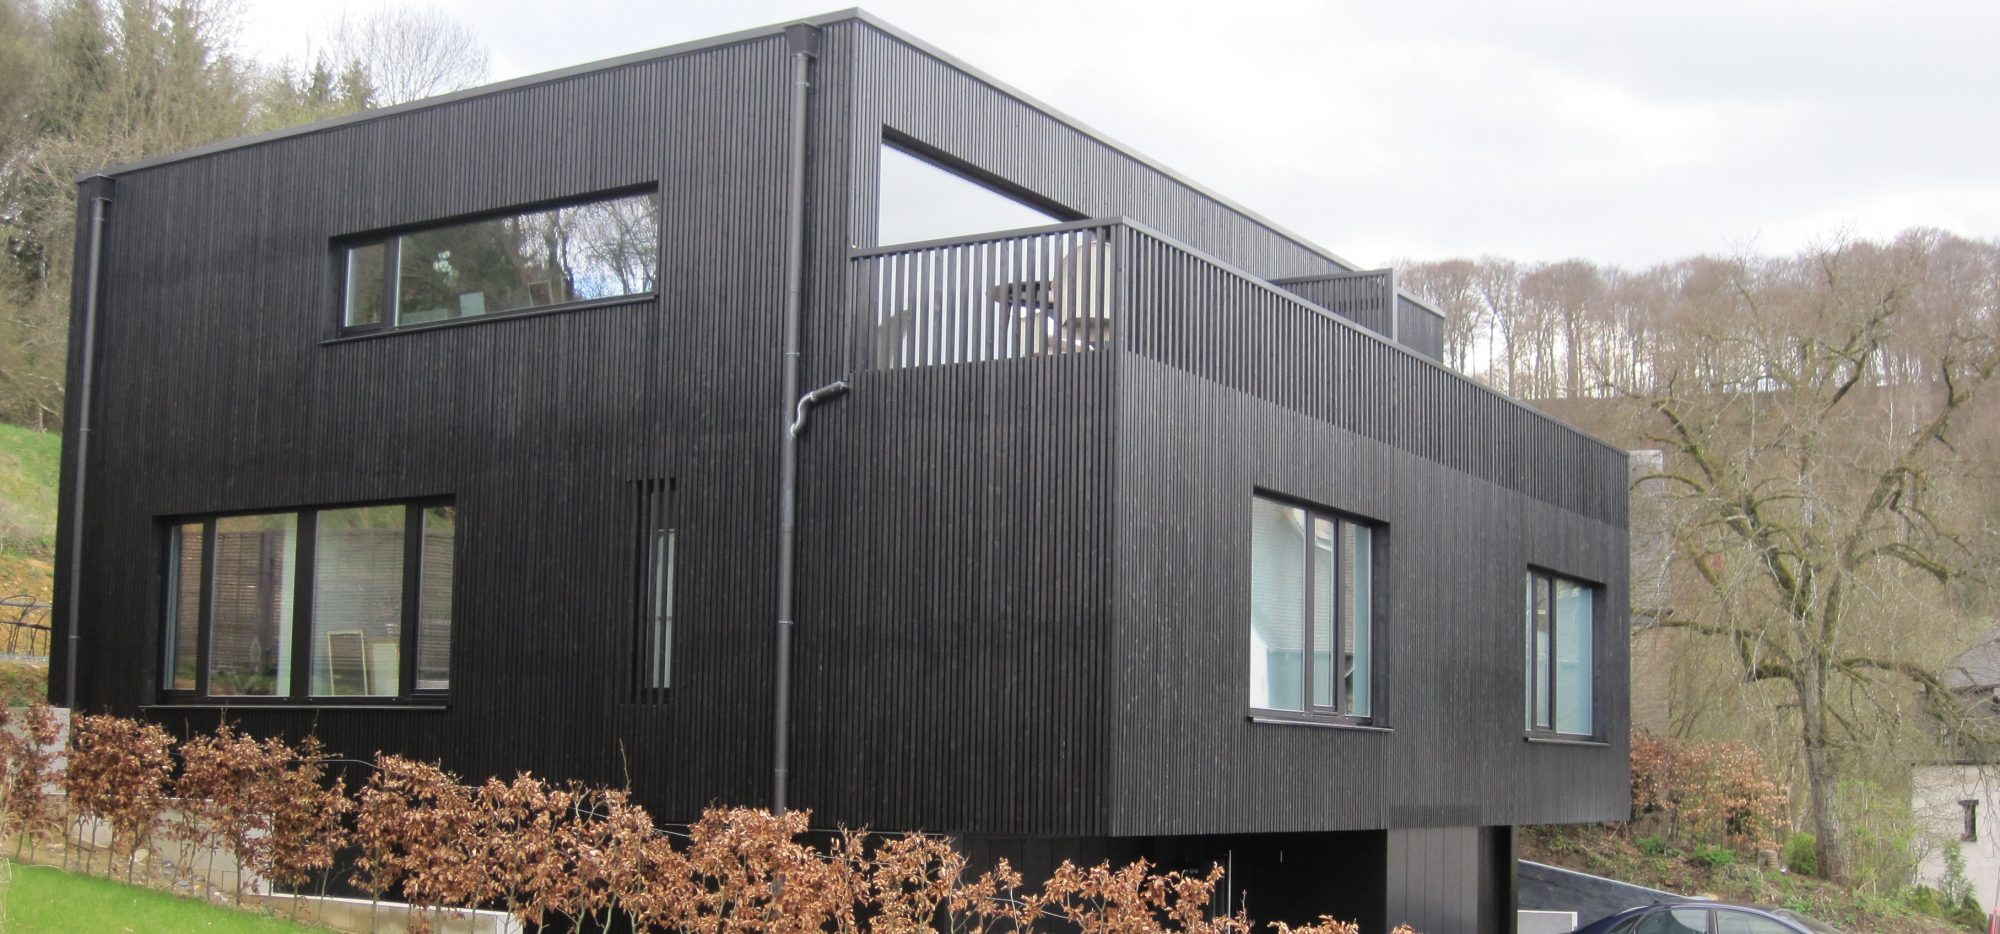 Wooden duplex in Luxembourg